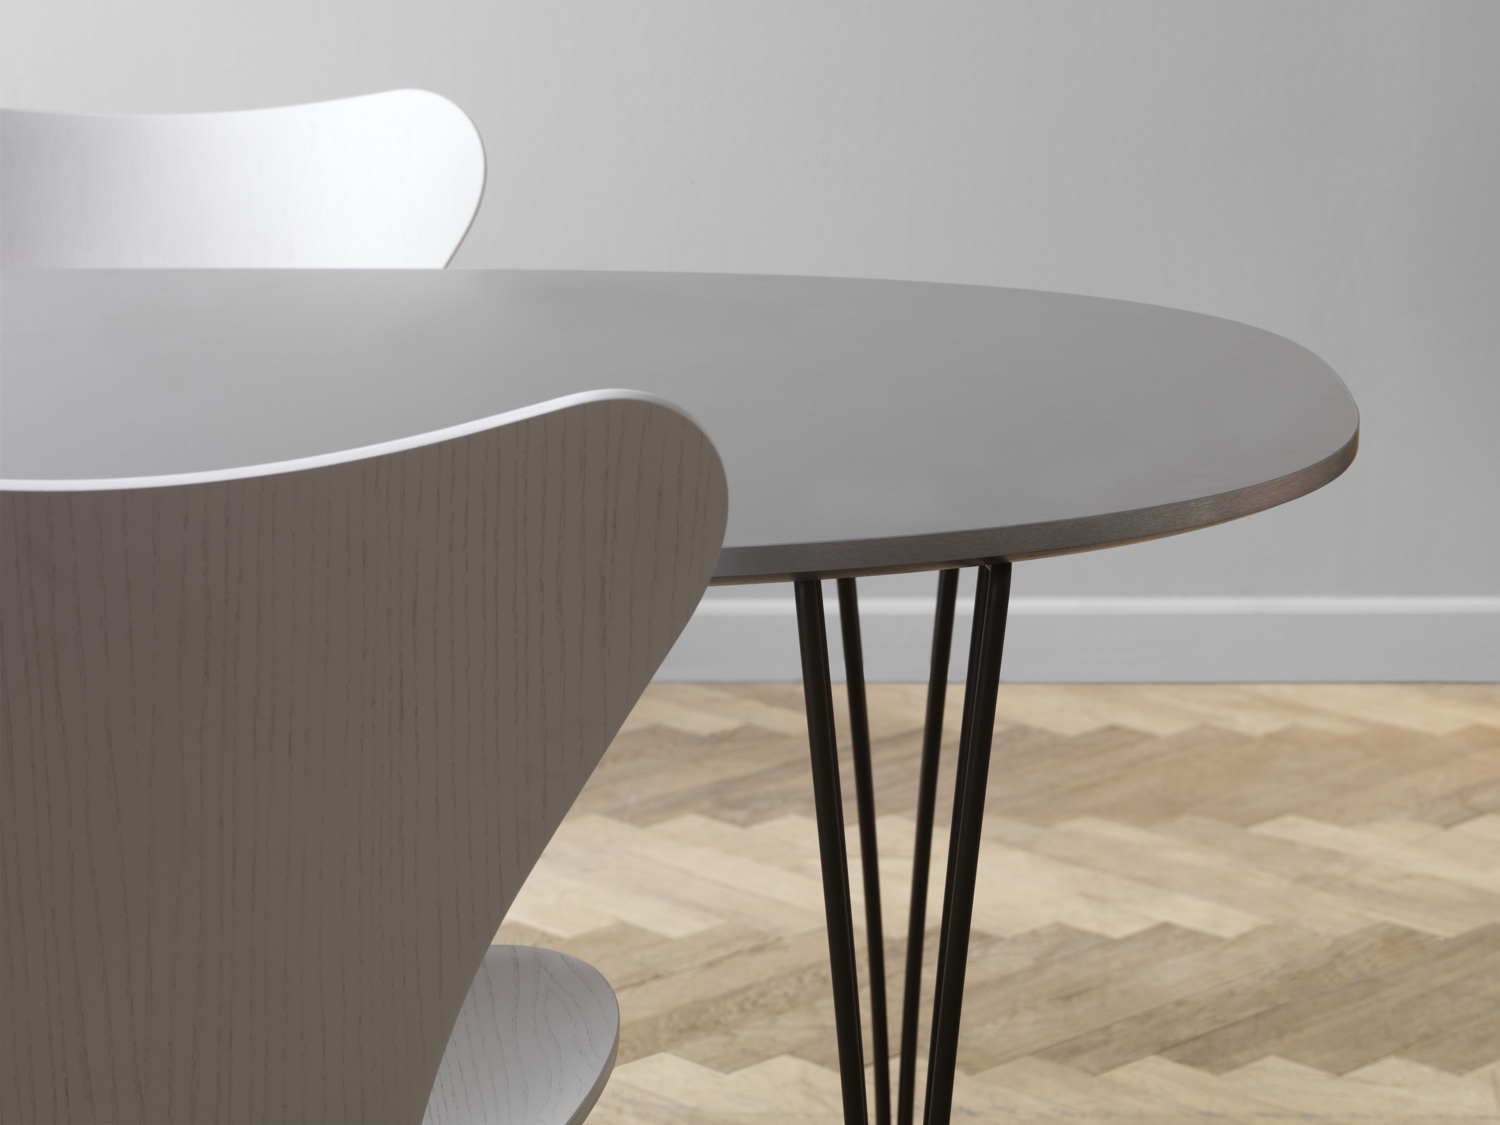 Super-Elliptical™-table-in-grey-laminate